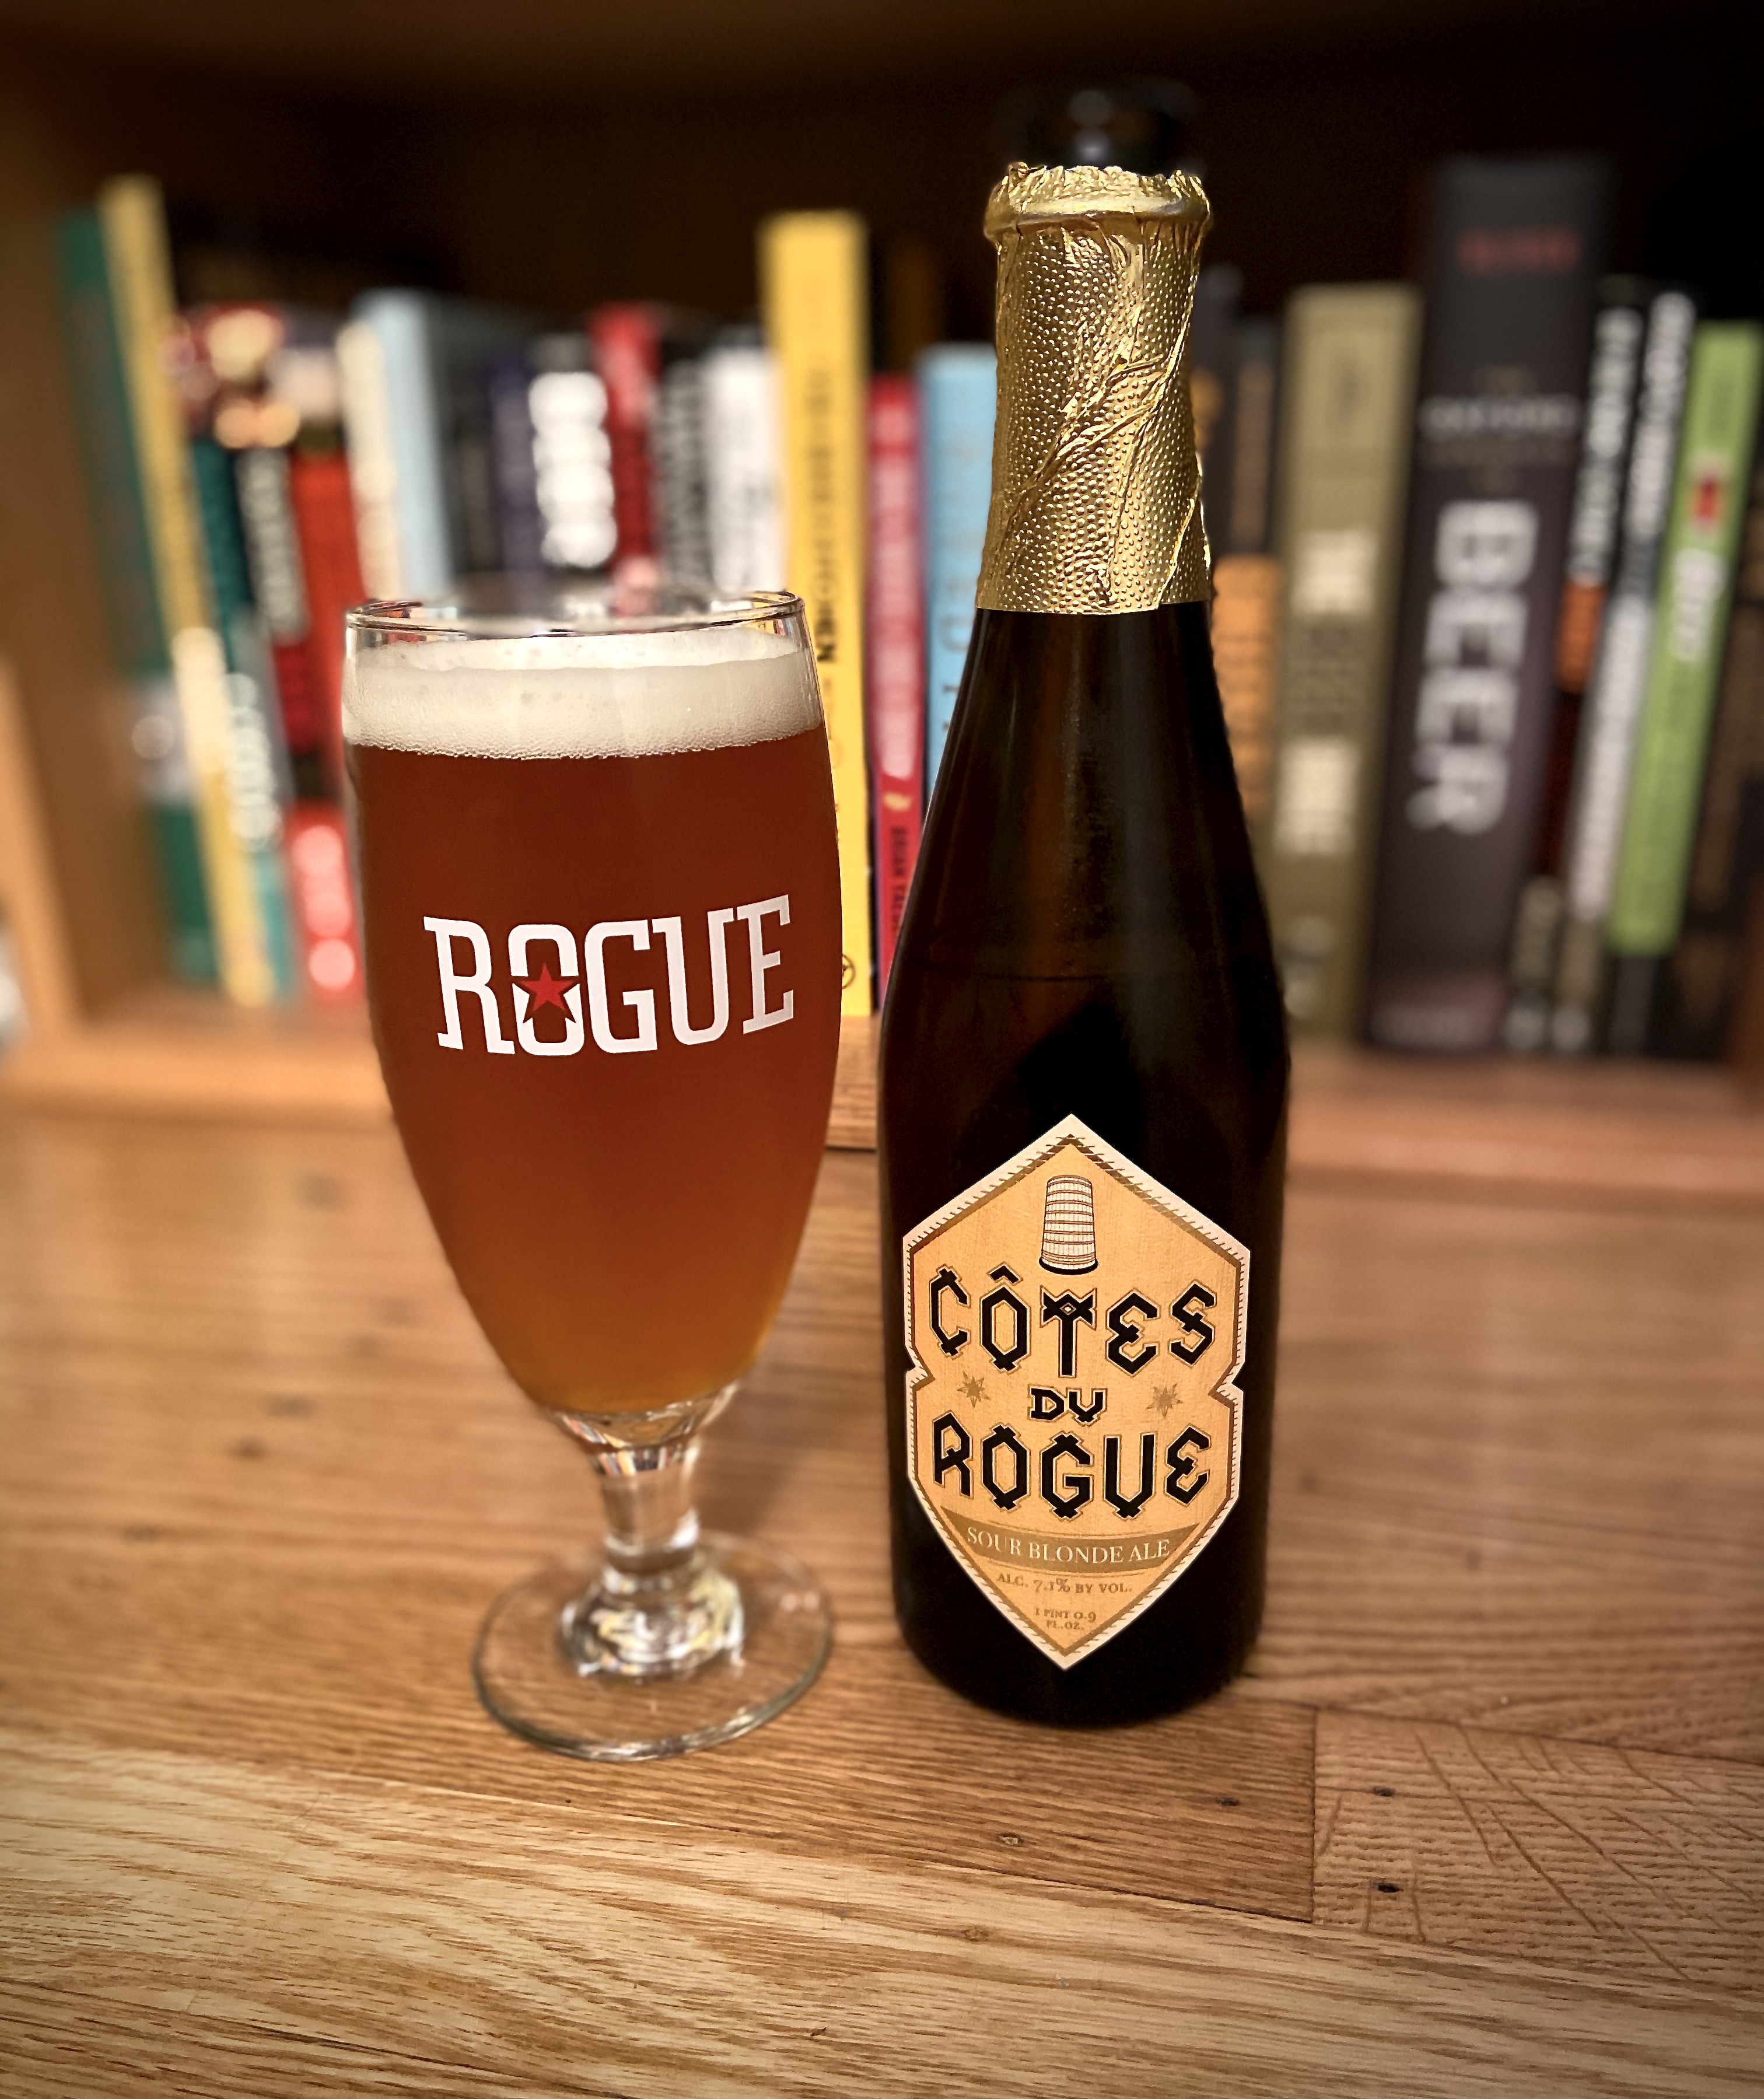 Côtes du Rogue is a fine example of a mixed culture, barrel-aged sour ale.